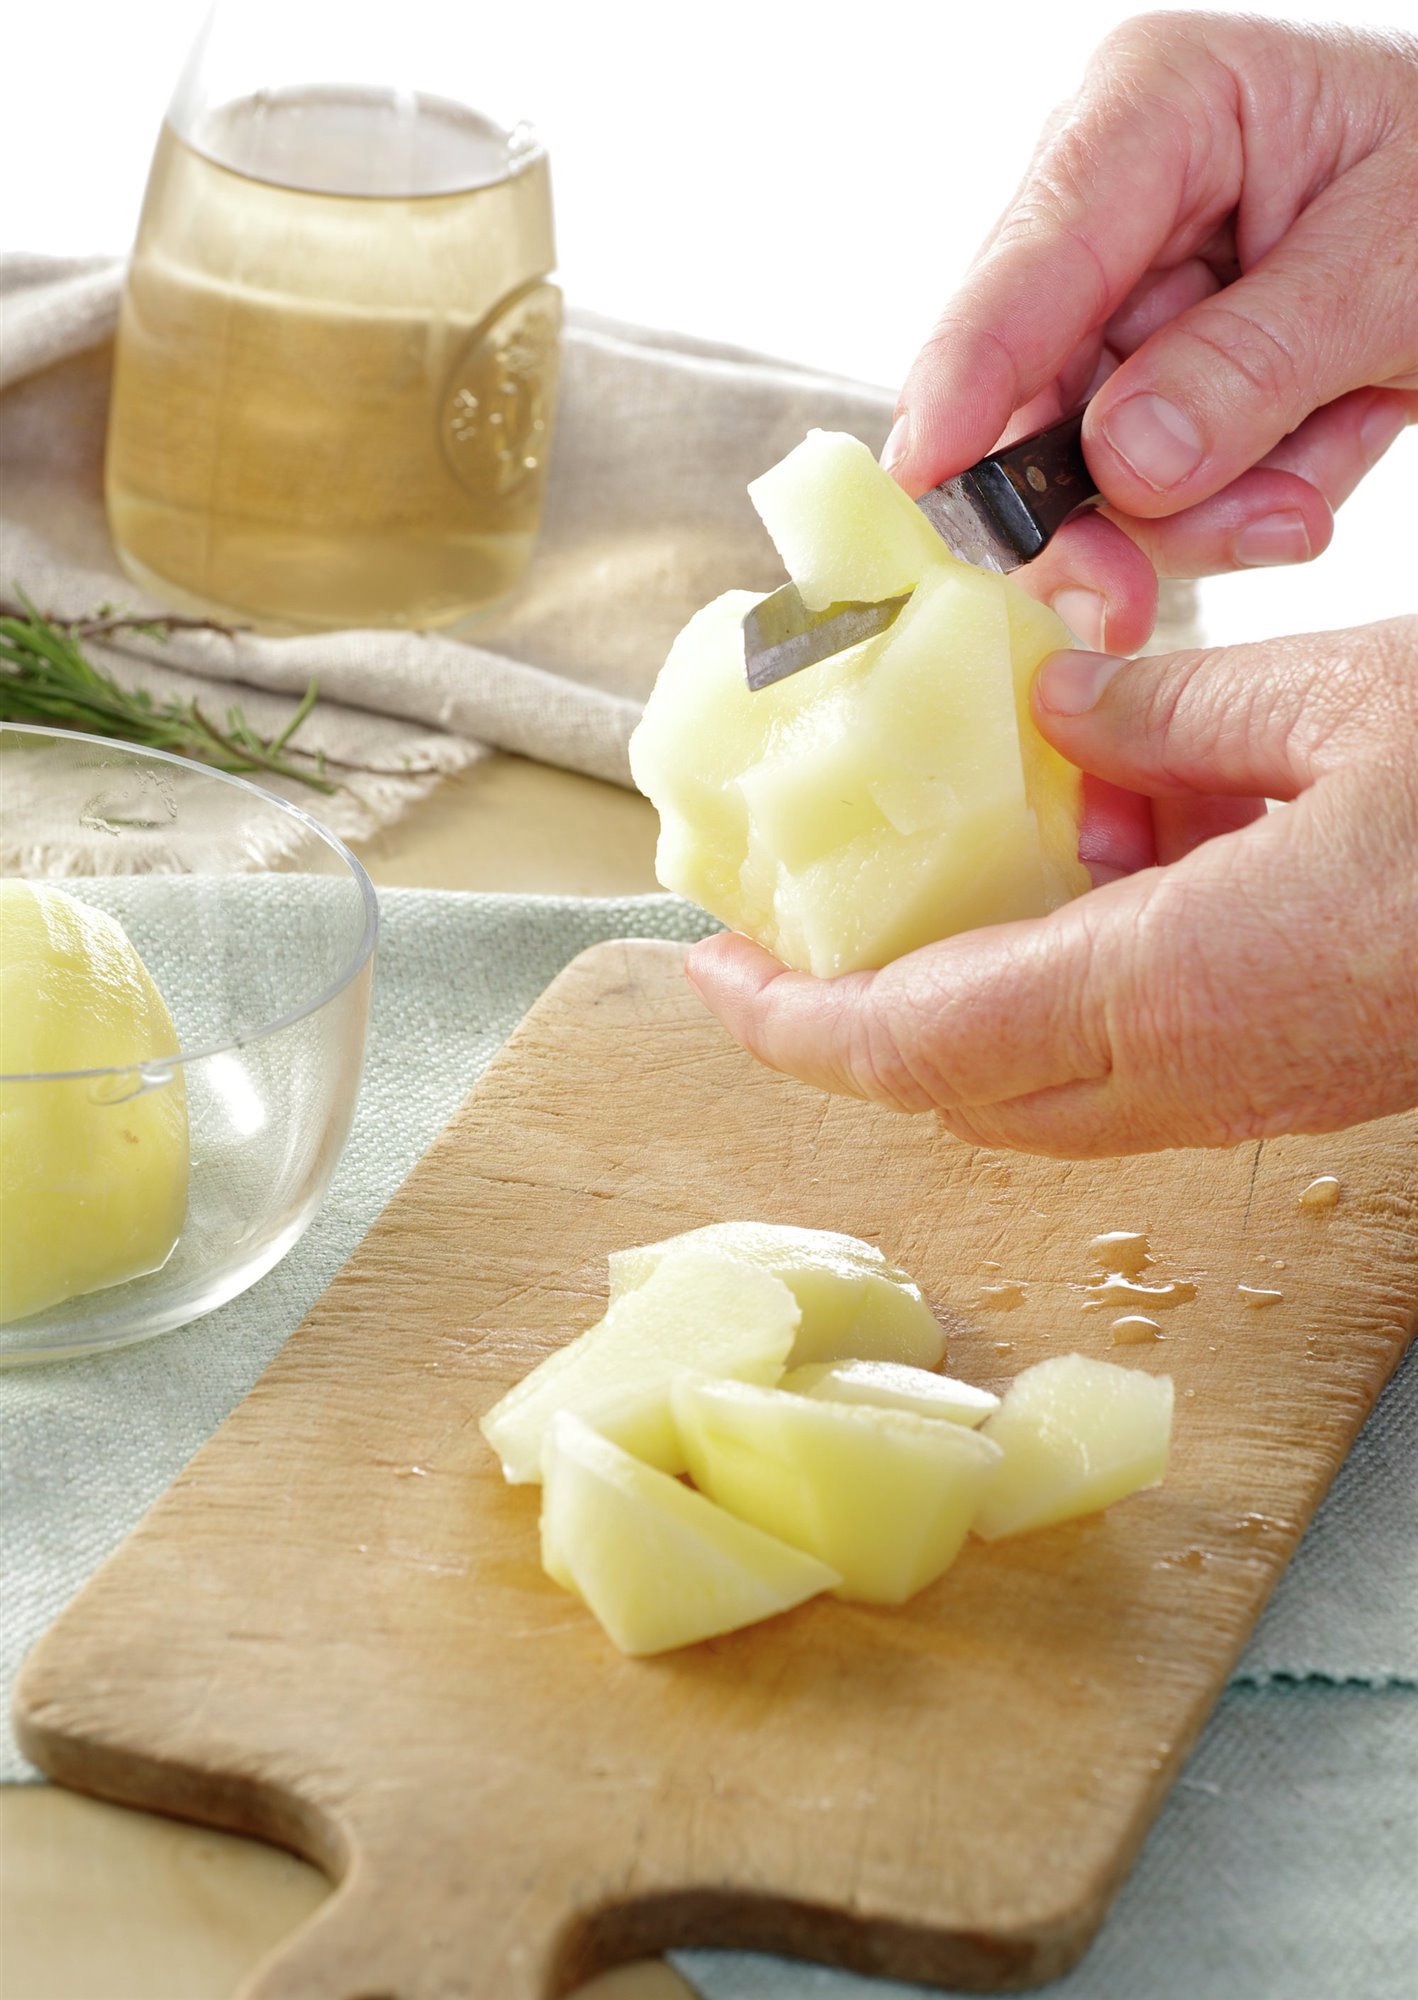 1. Chasca las patatas